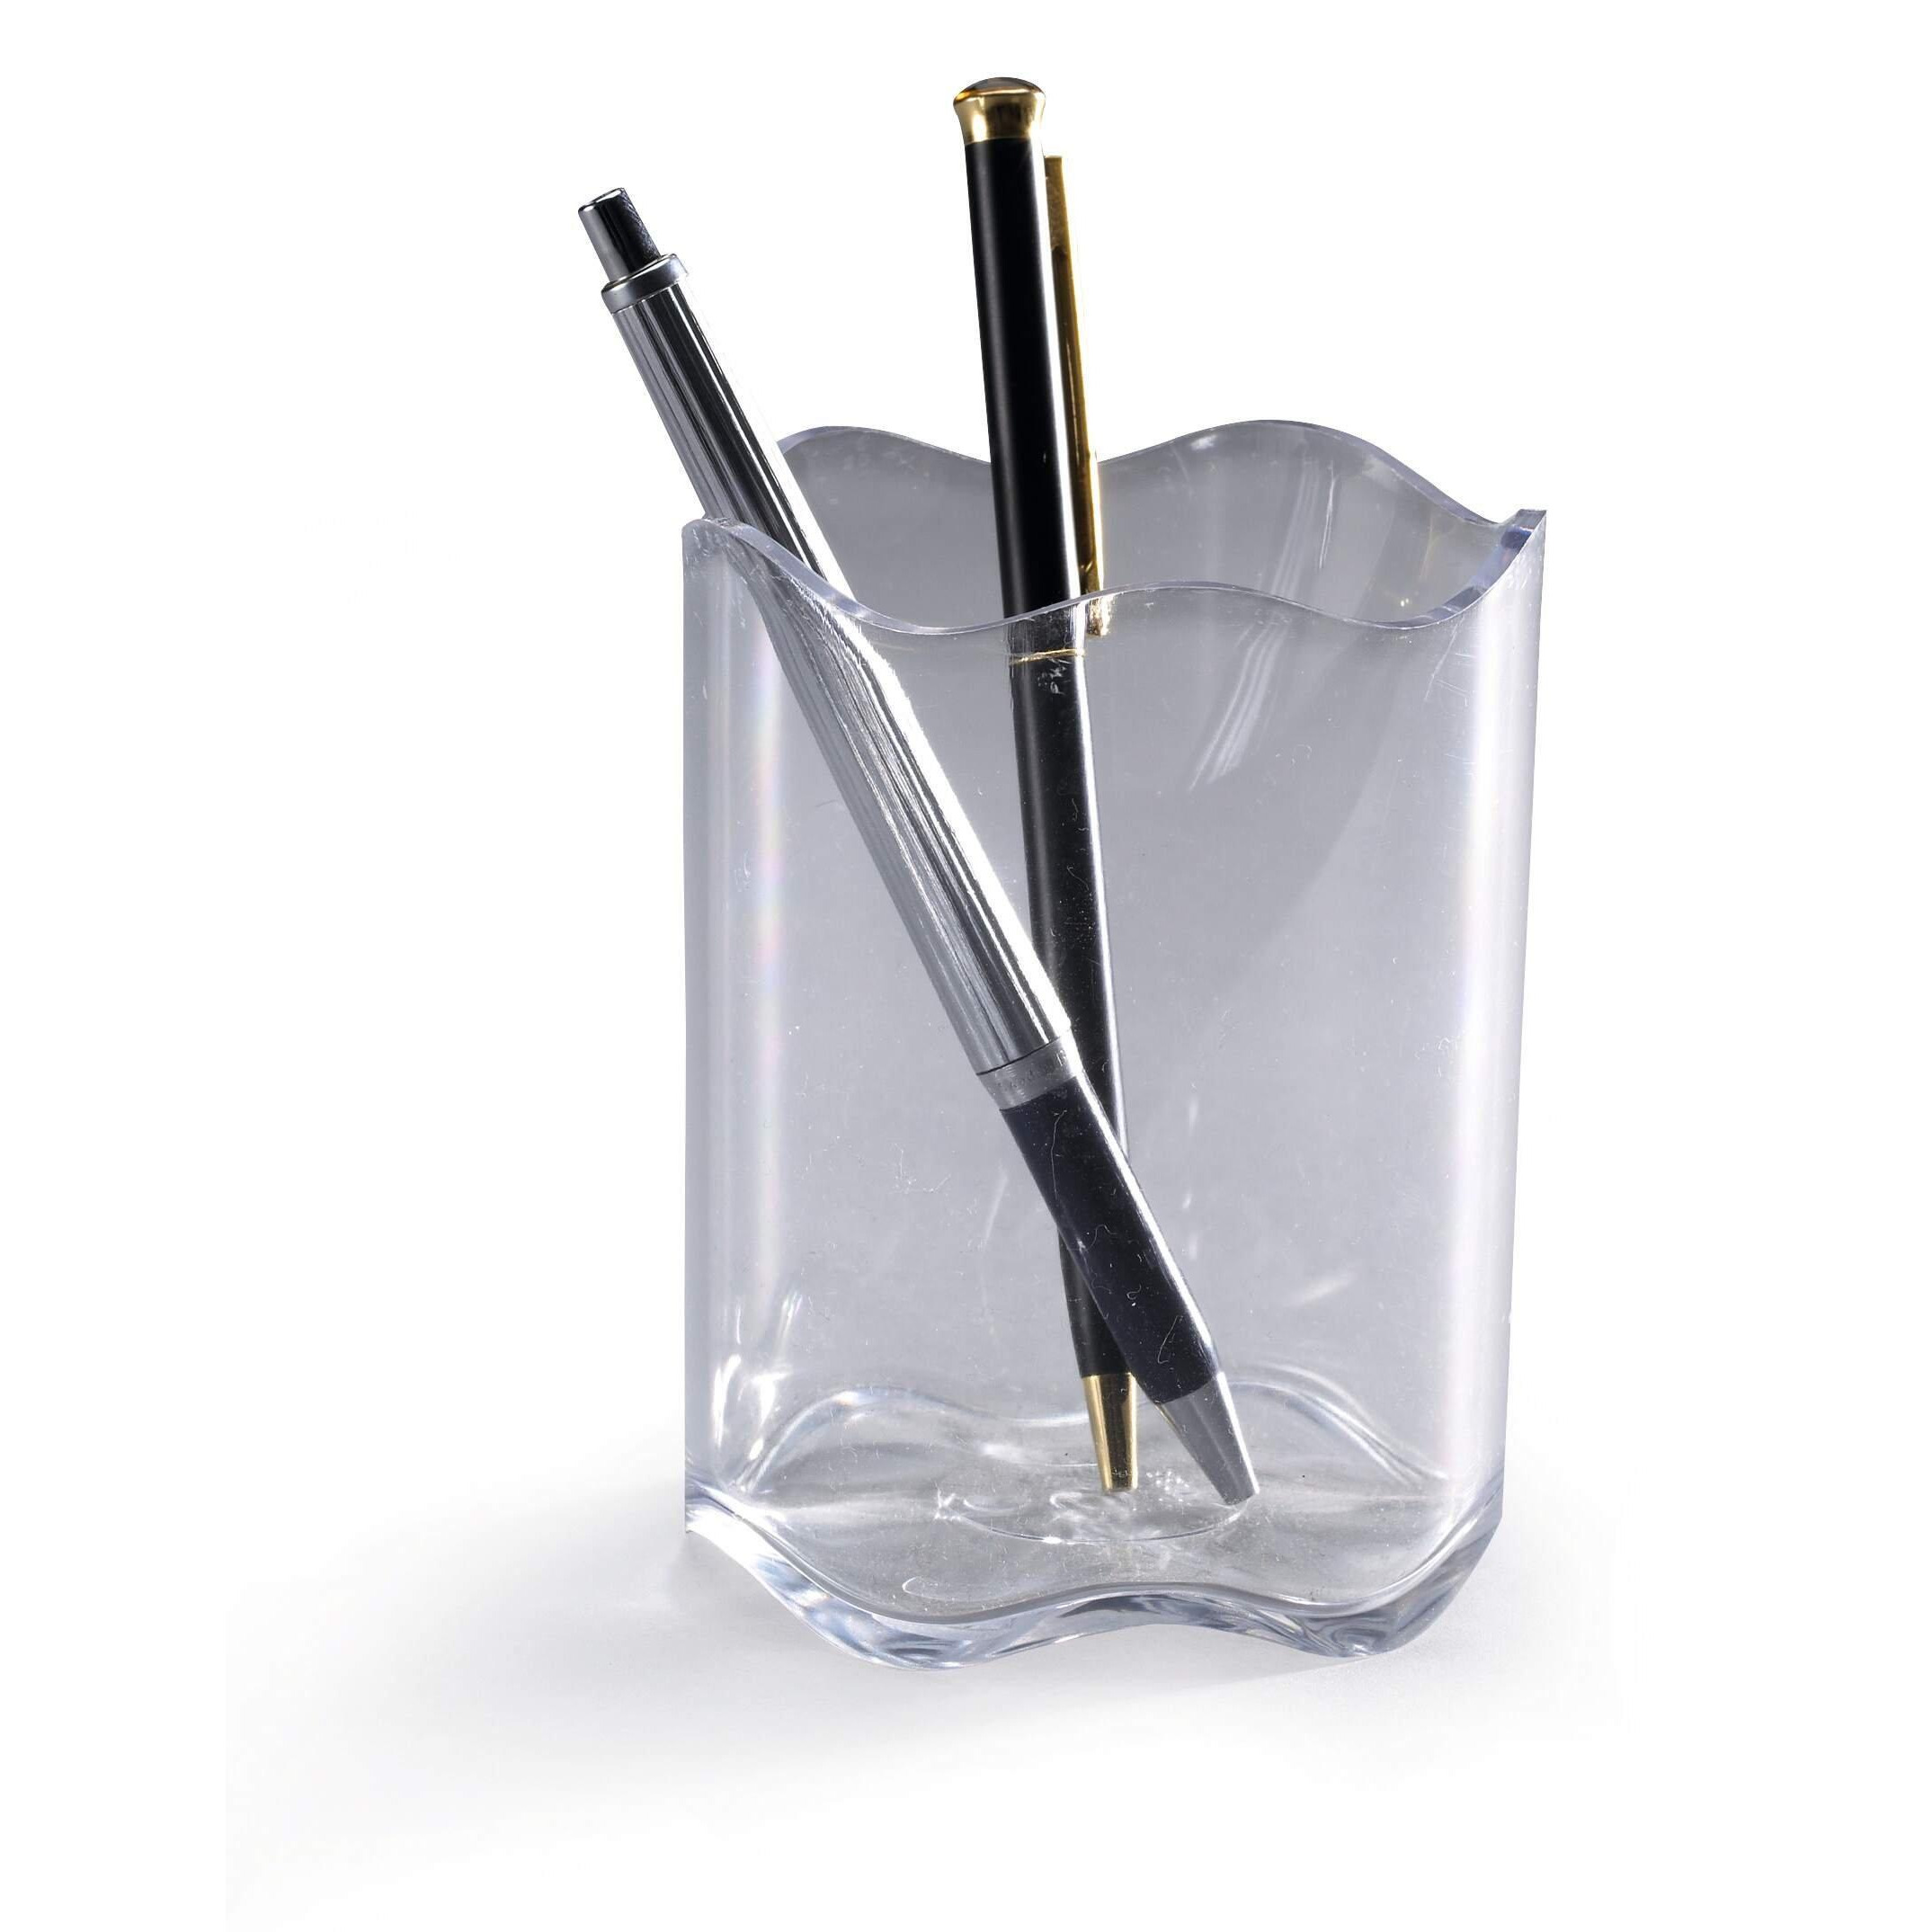 TREND Pen Pot Pencil Holder Desk Tidy Transparent Organizer Cup - Clear - image 1